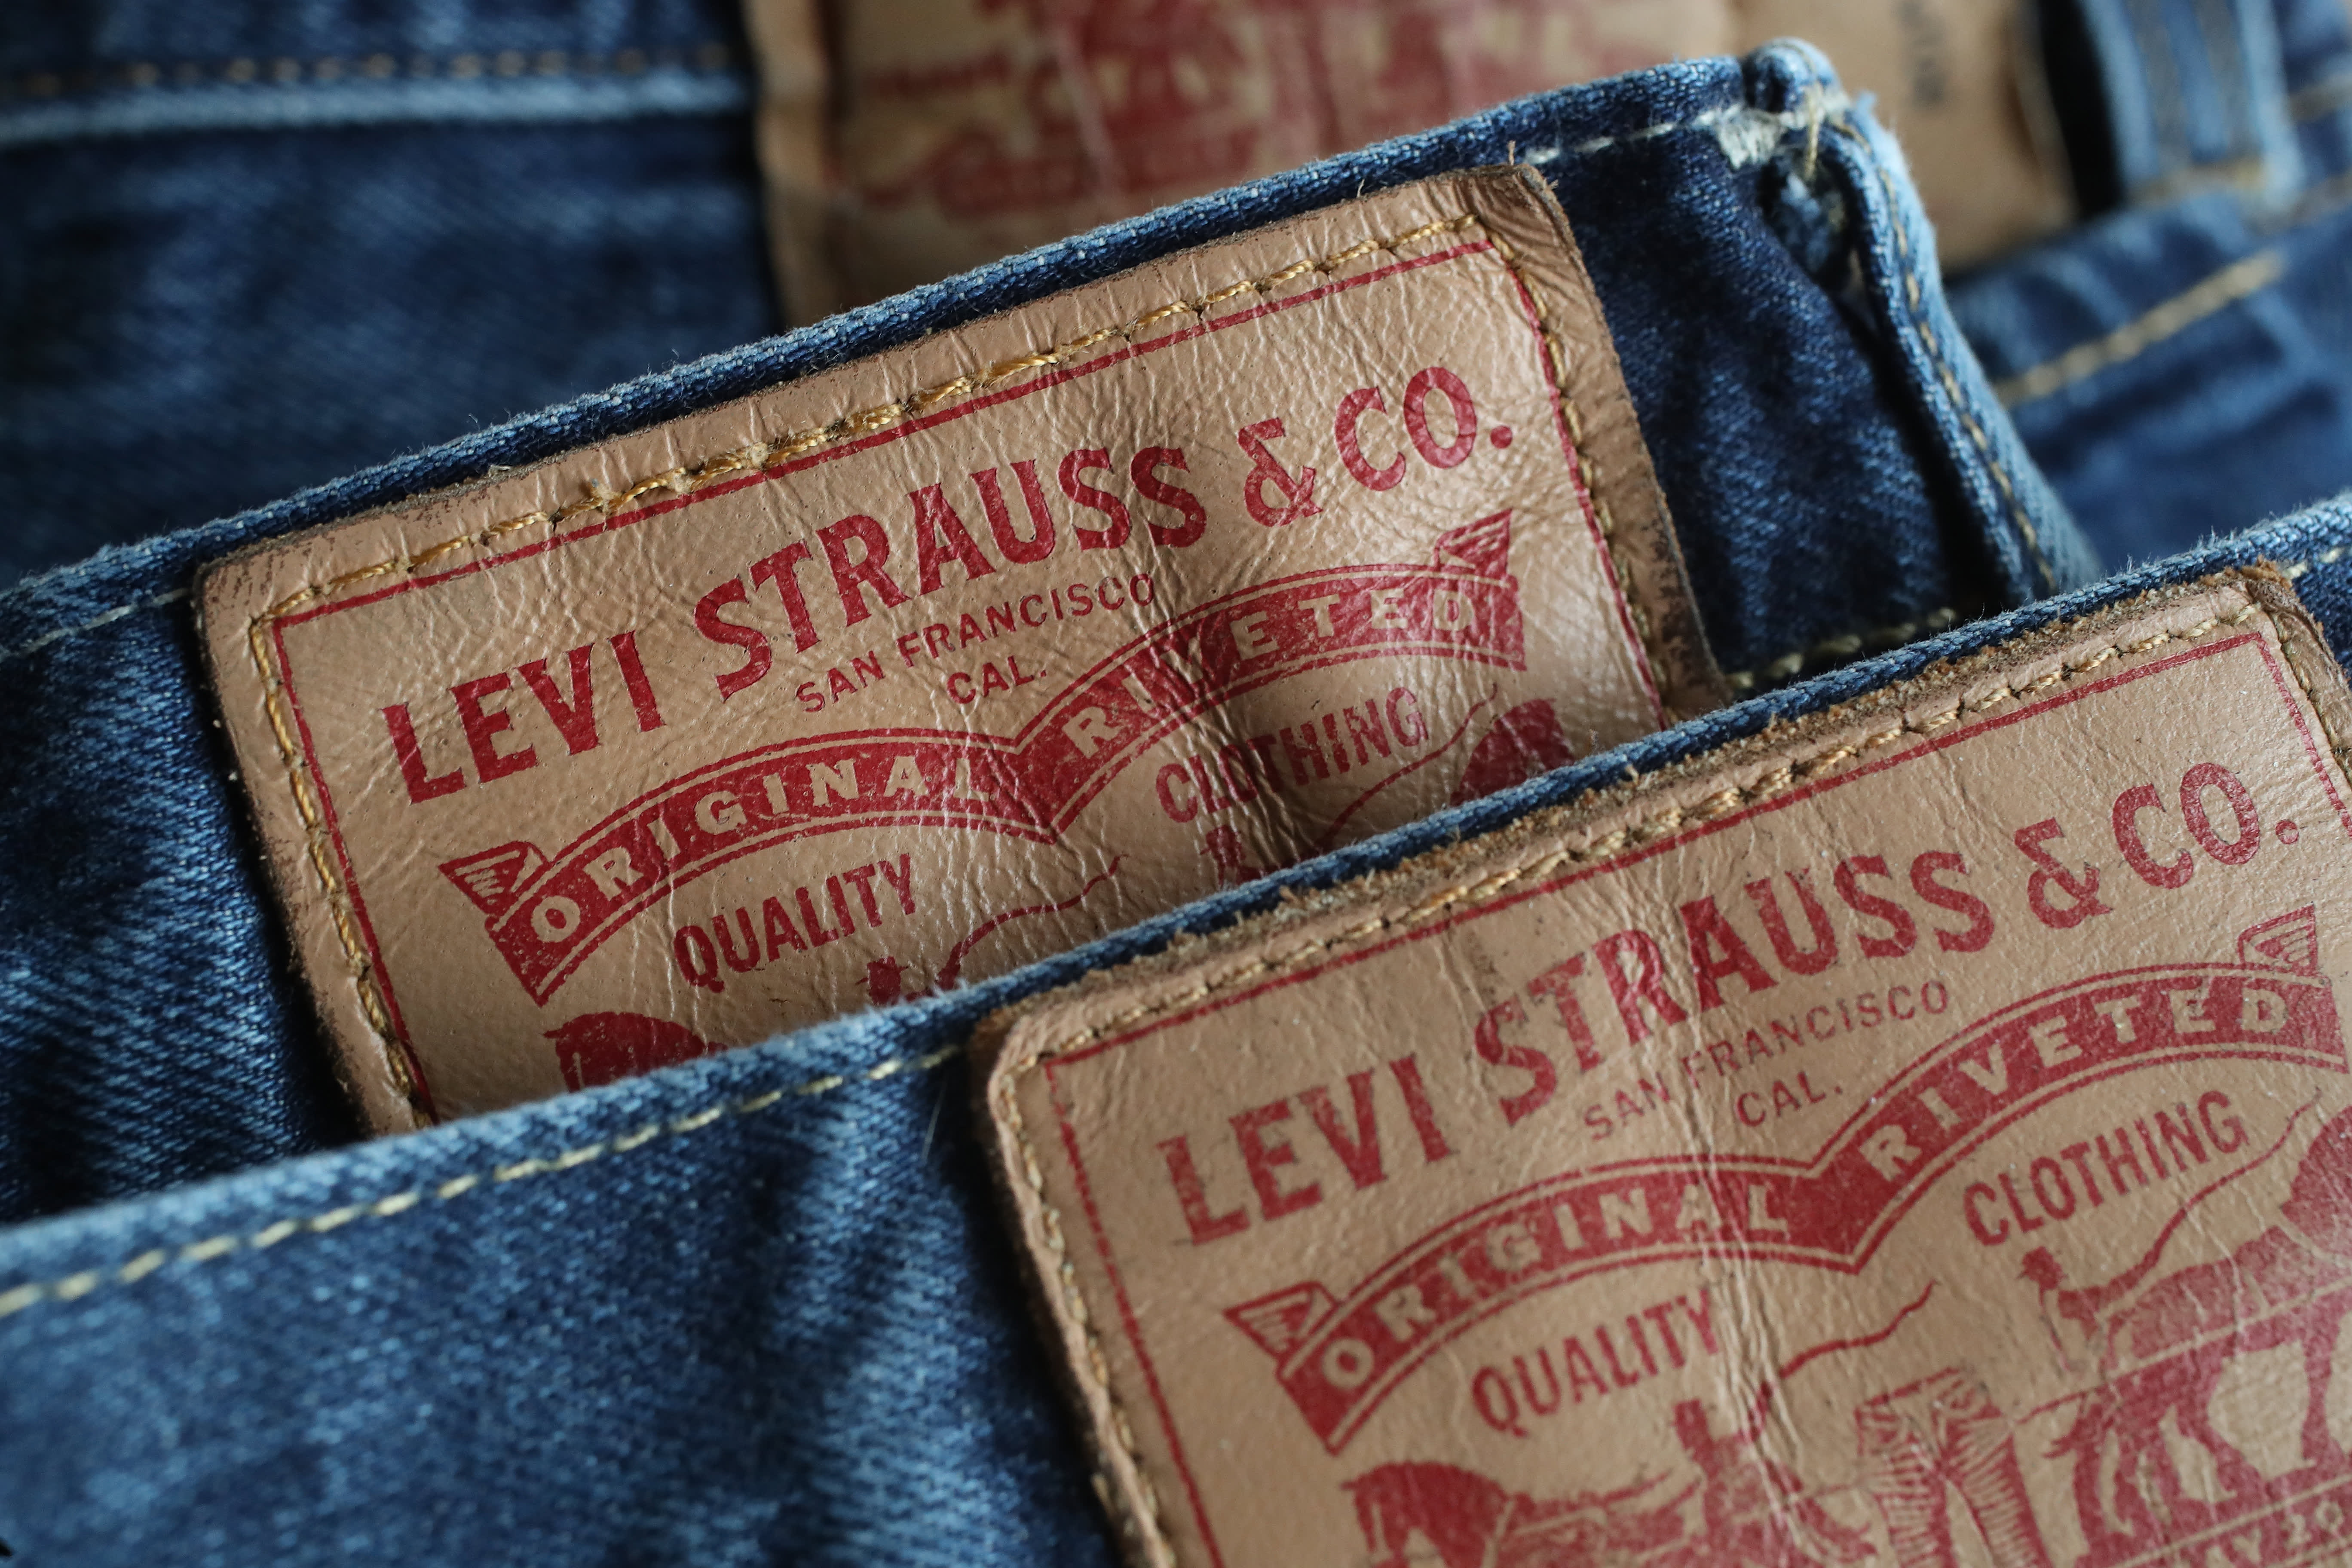 Levi Strauss IPO seeing high demand 